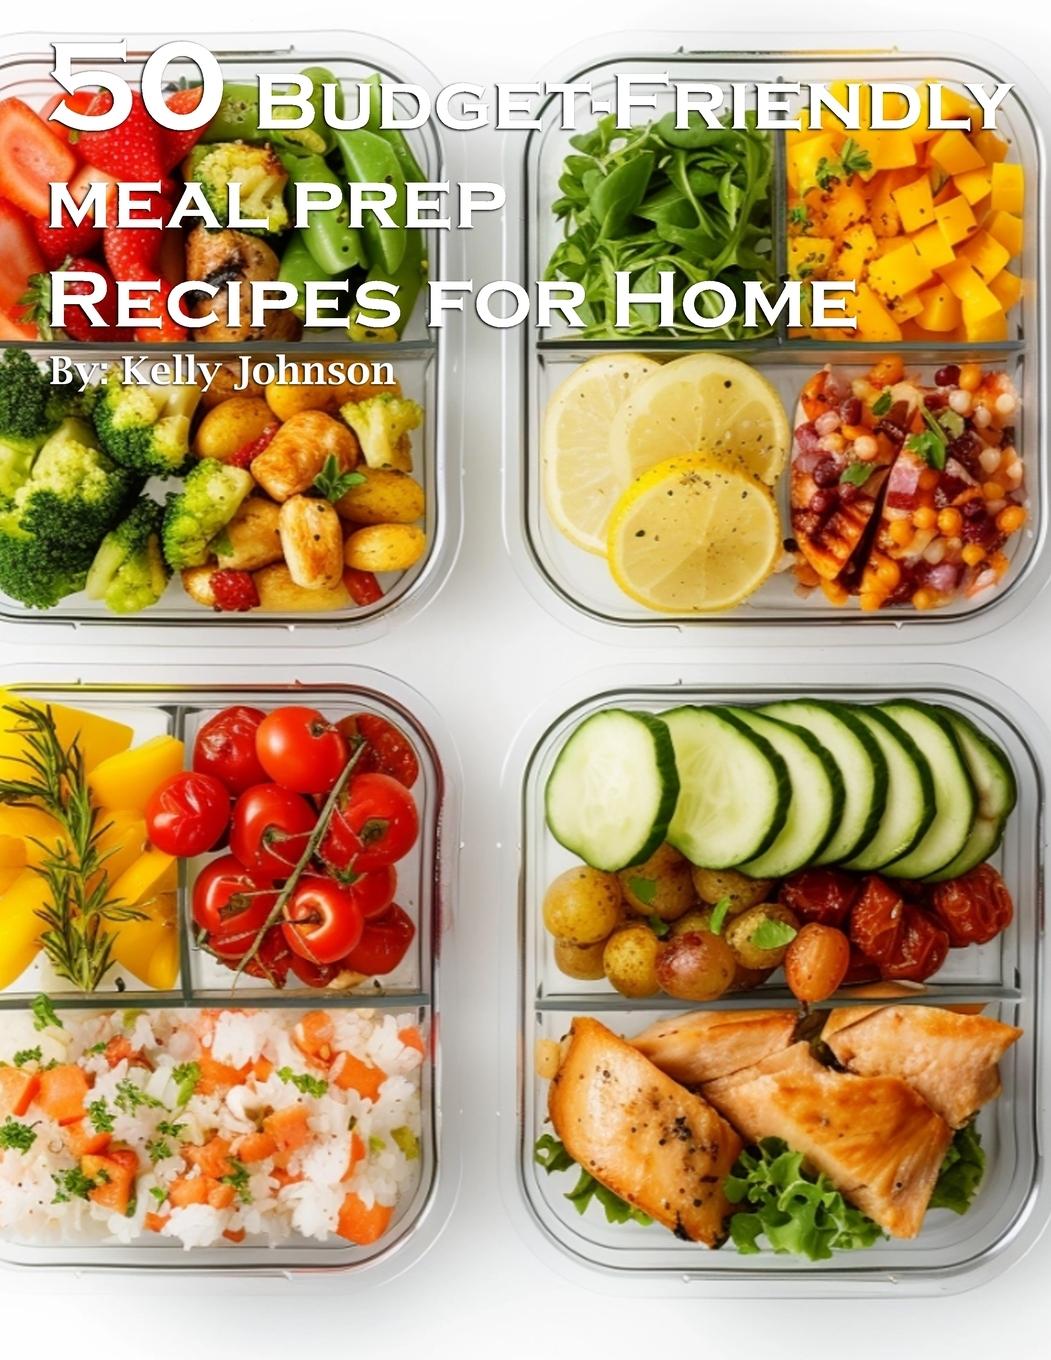 Kniha 50 Budget-Friendly Meal Prep Recipes for Home 